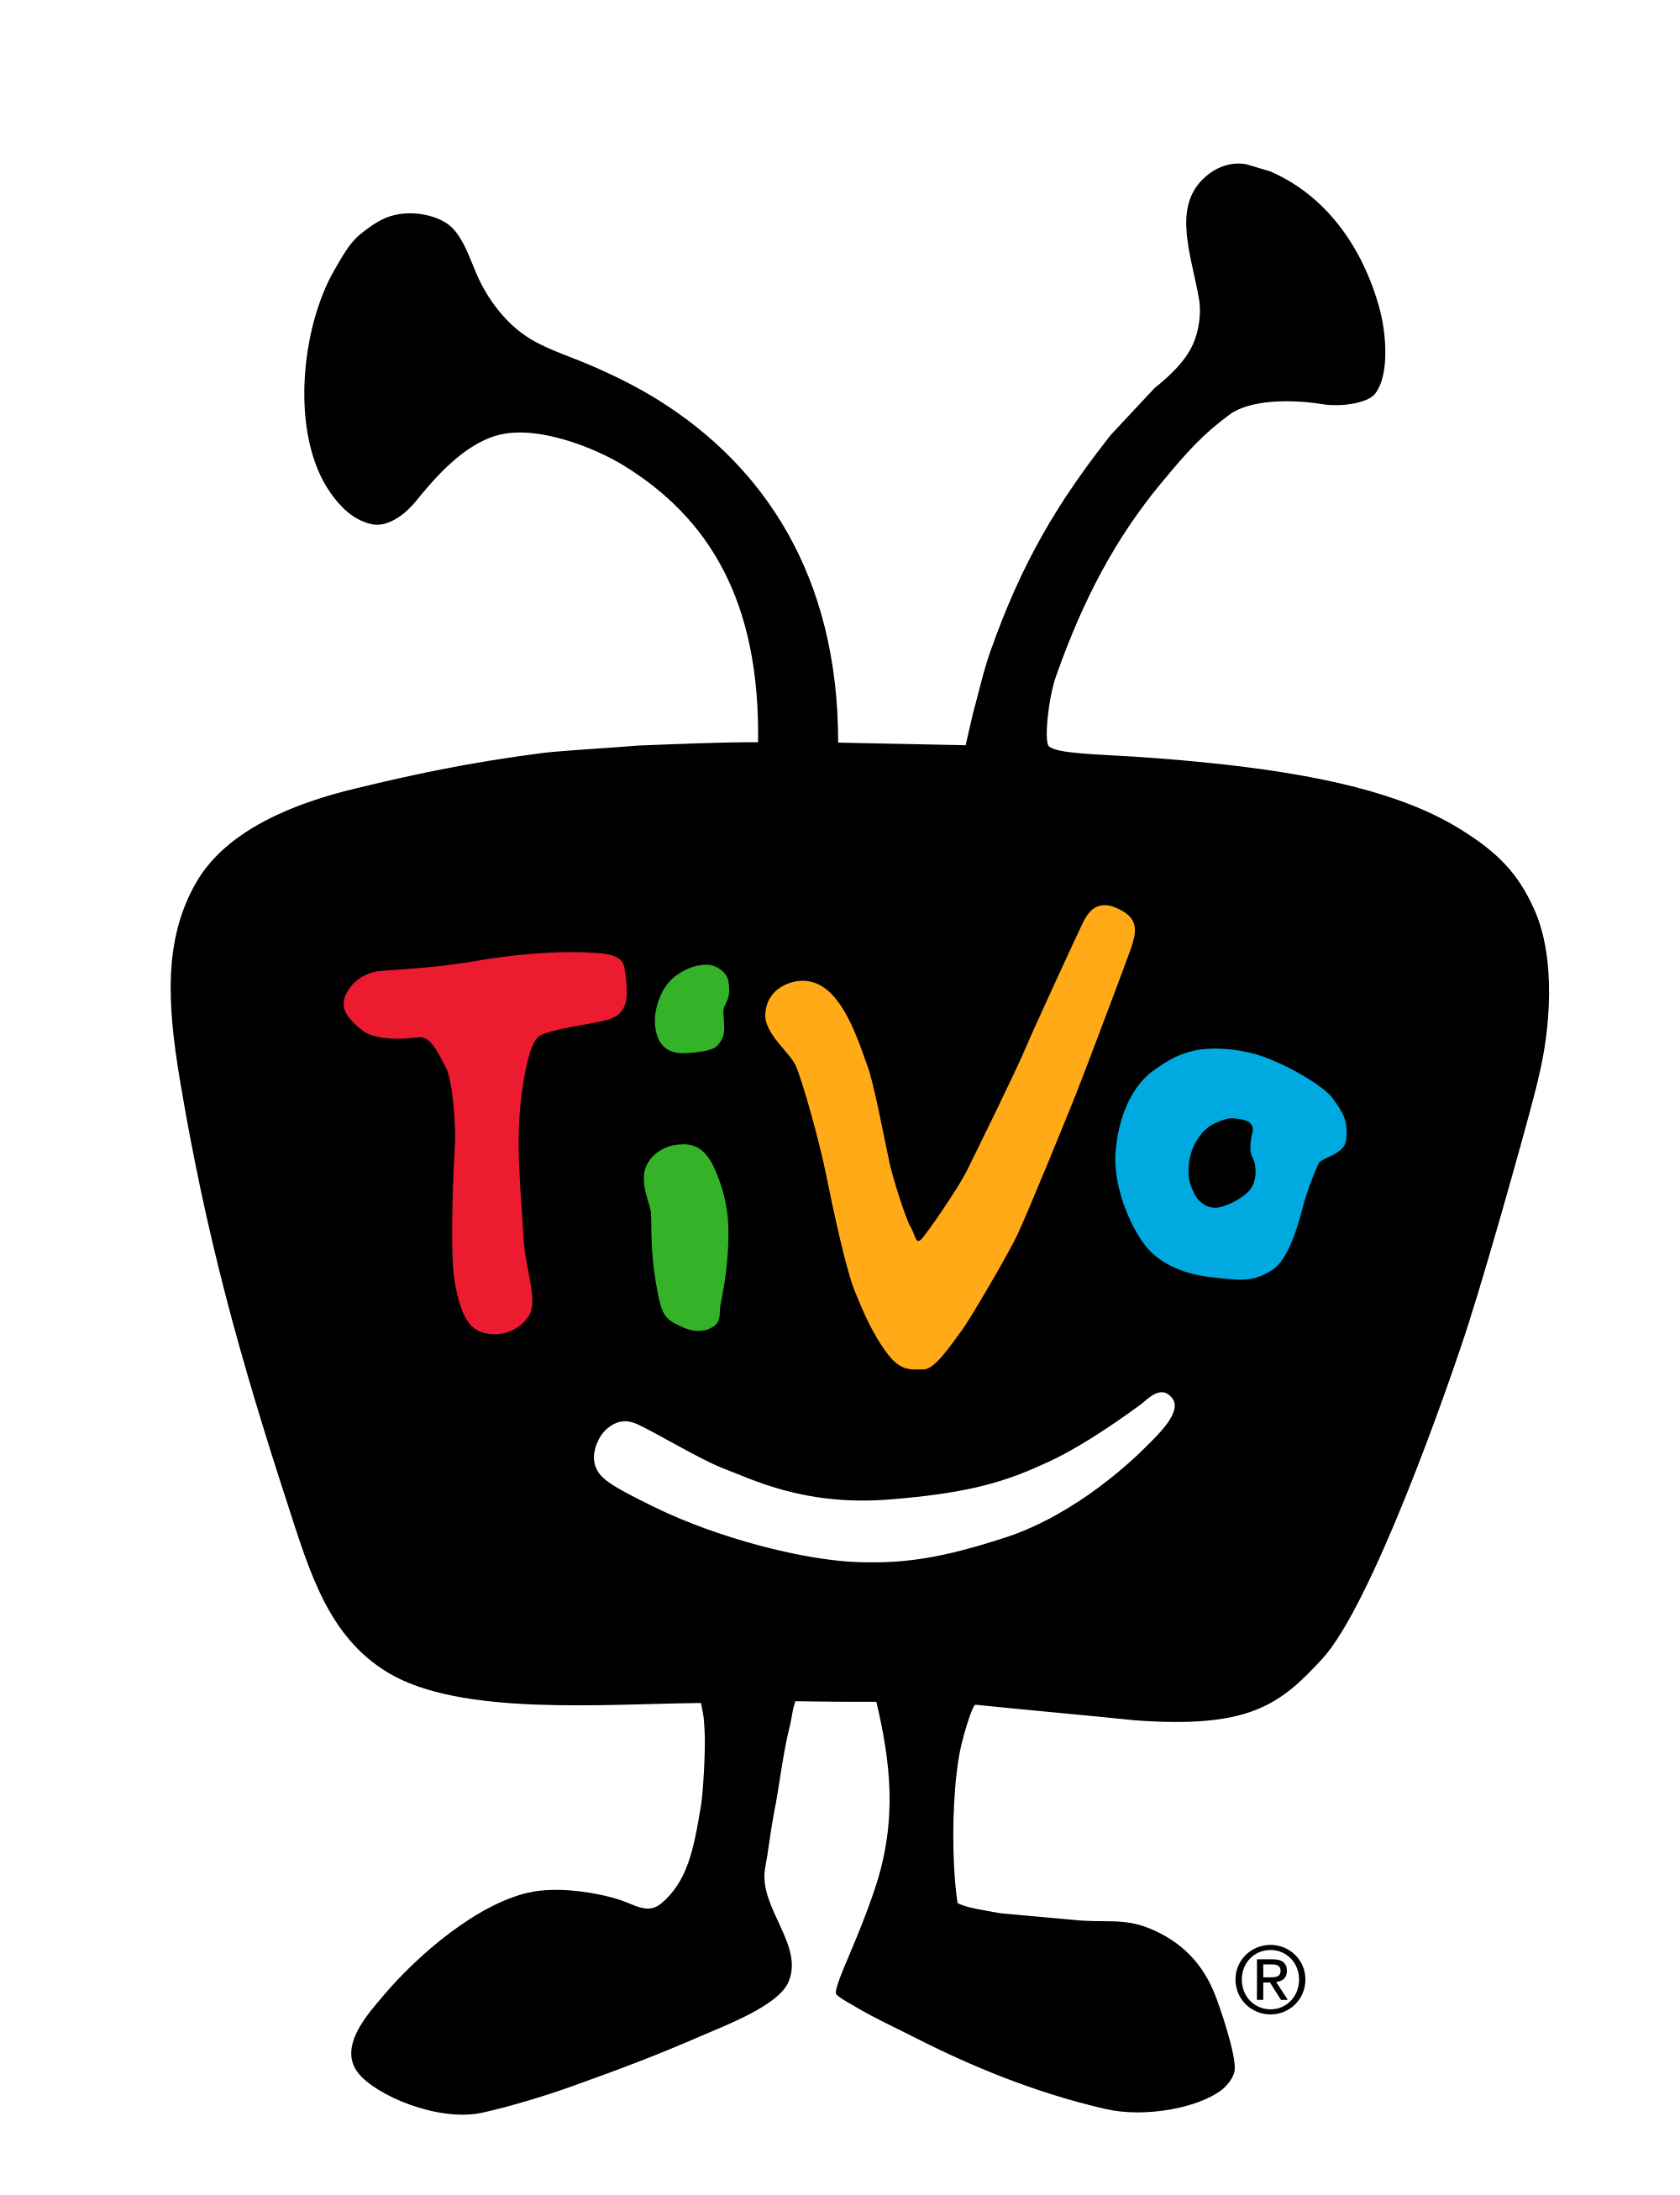 TiVo Logo - TiVo Tries A New Look